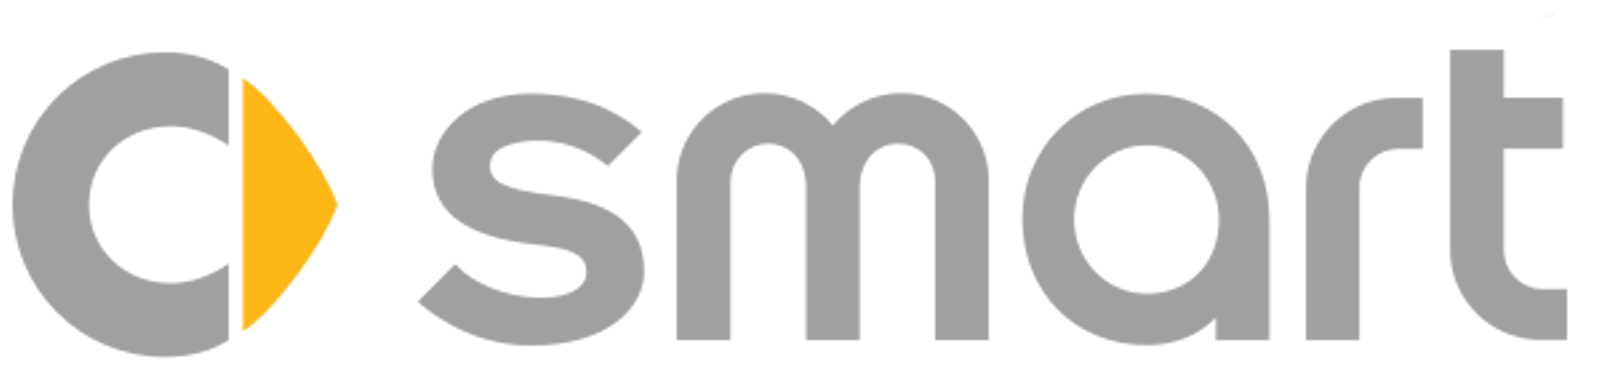 логотип Smart